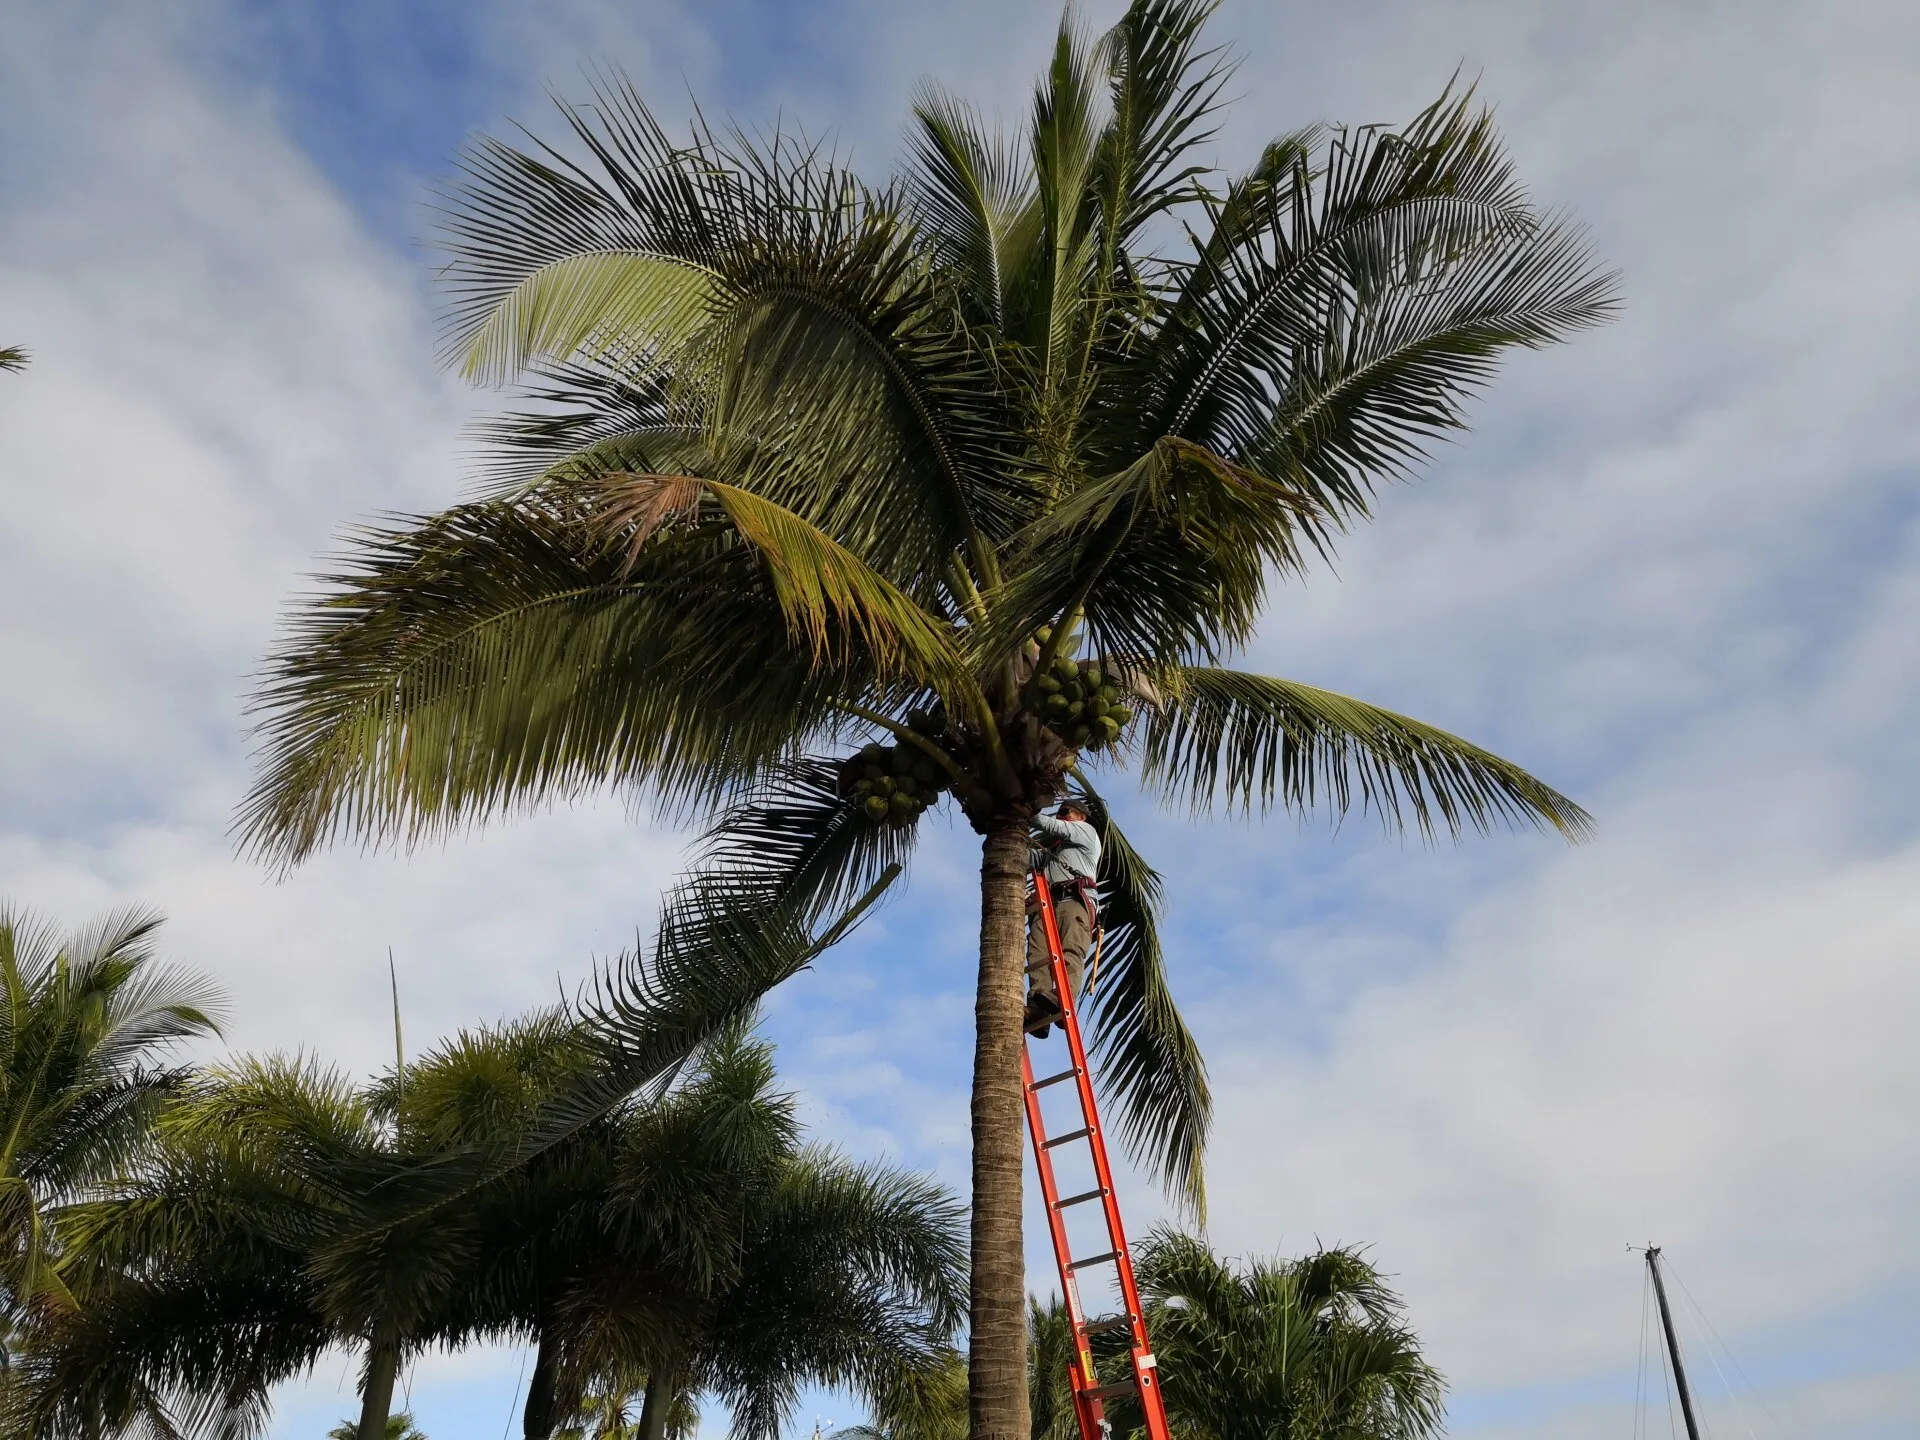 Boca Tree Service Arborist in Delray Beach trimming the palm tree